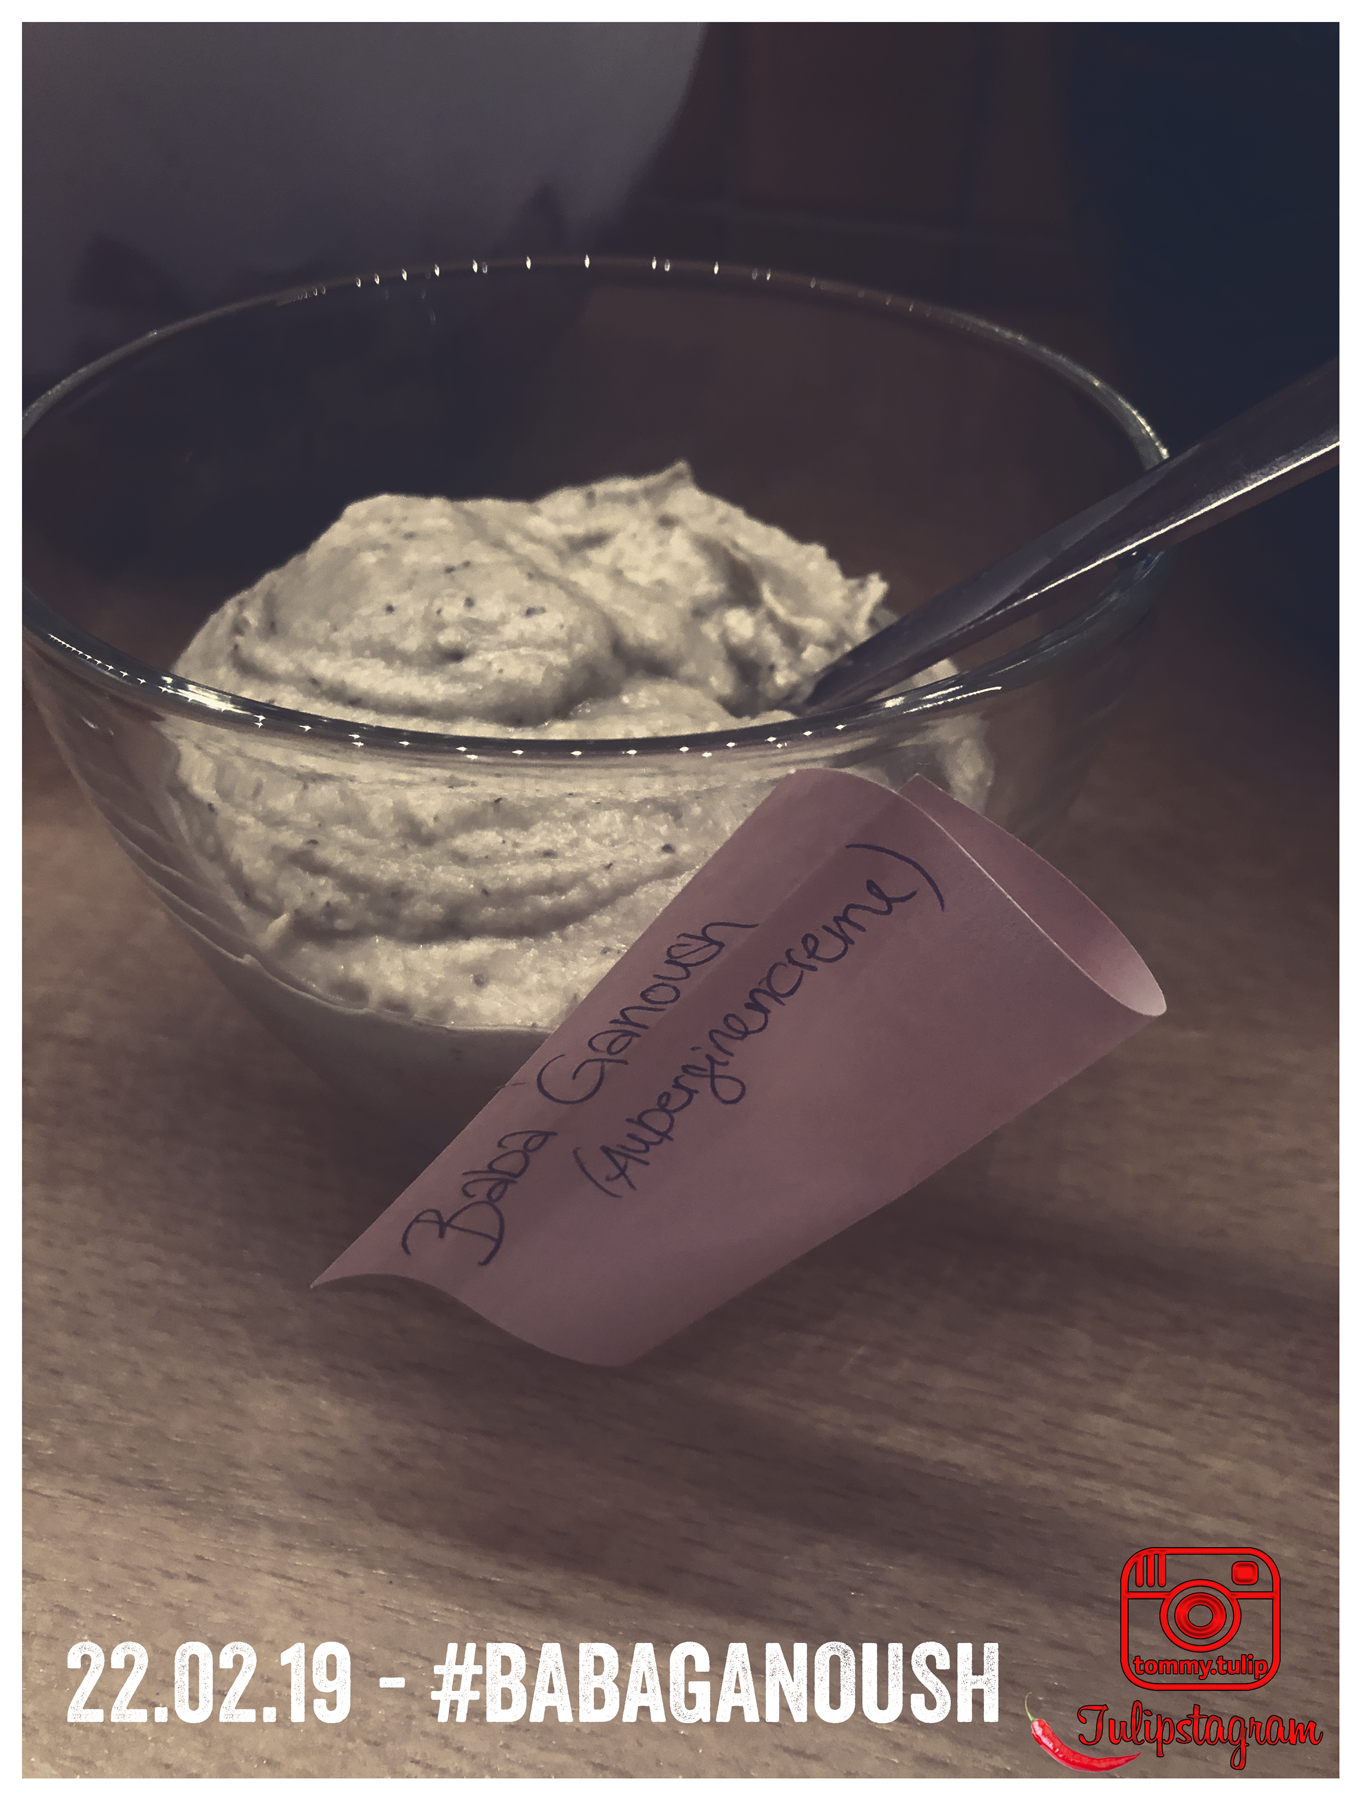 #BabaGanoush #Auberginencreme #vegetarisch (Upload 23.02.19) #TTT